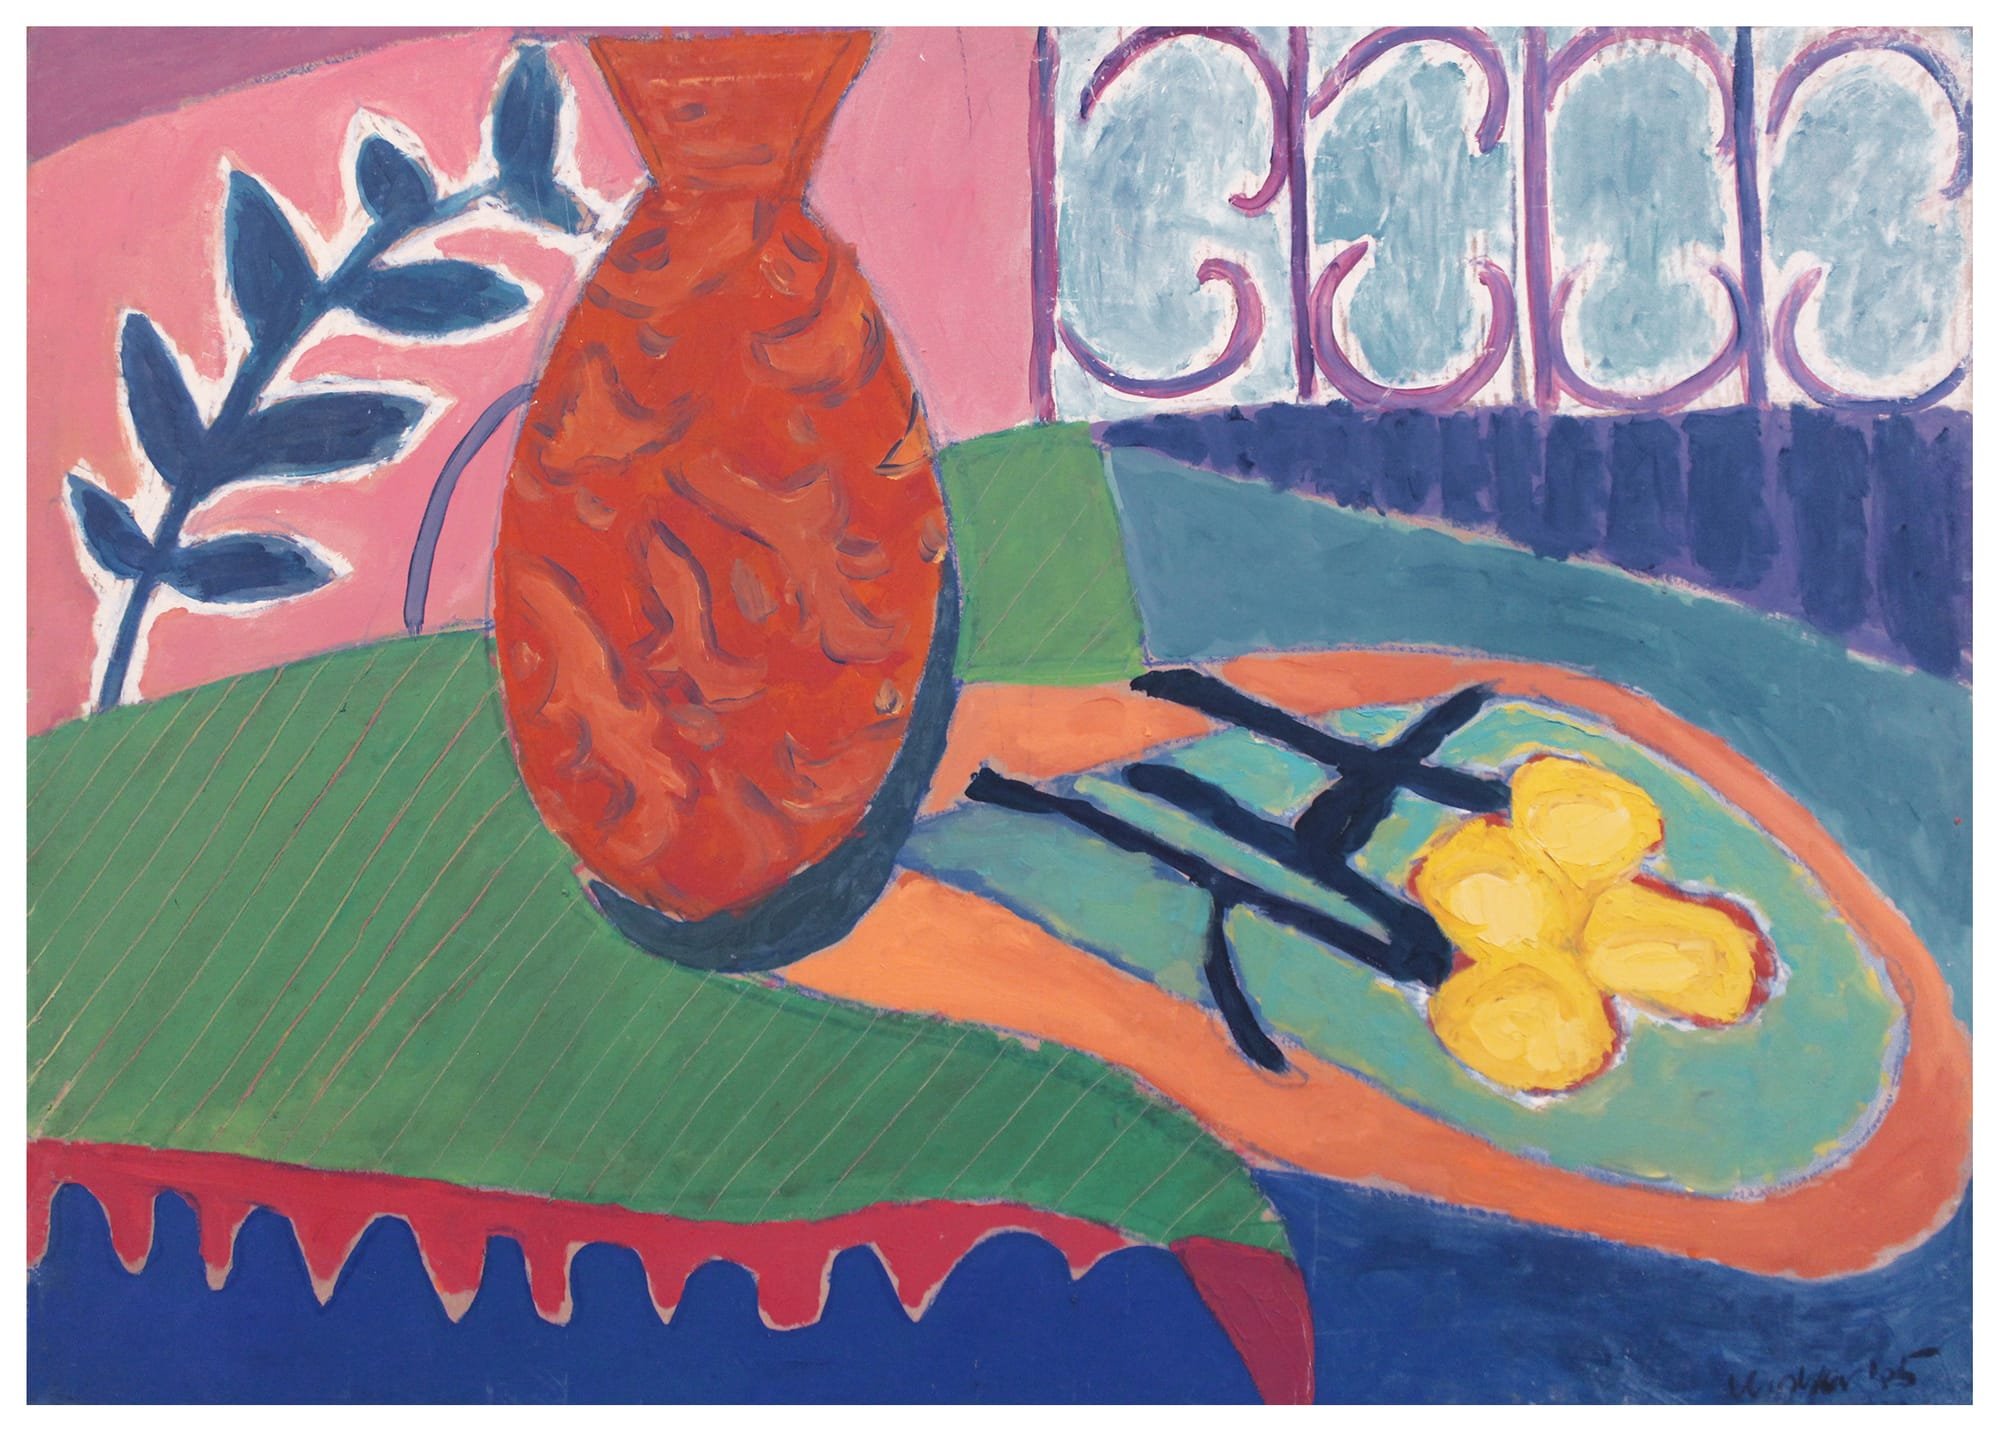 Still life, Matisse etudes, No. 1, 2004